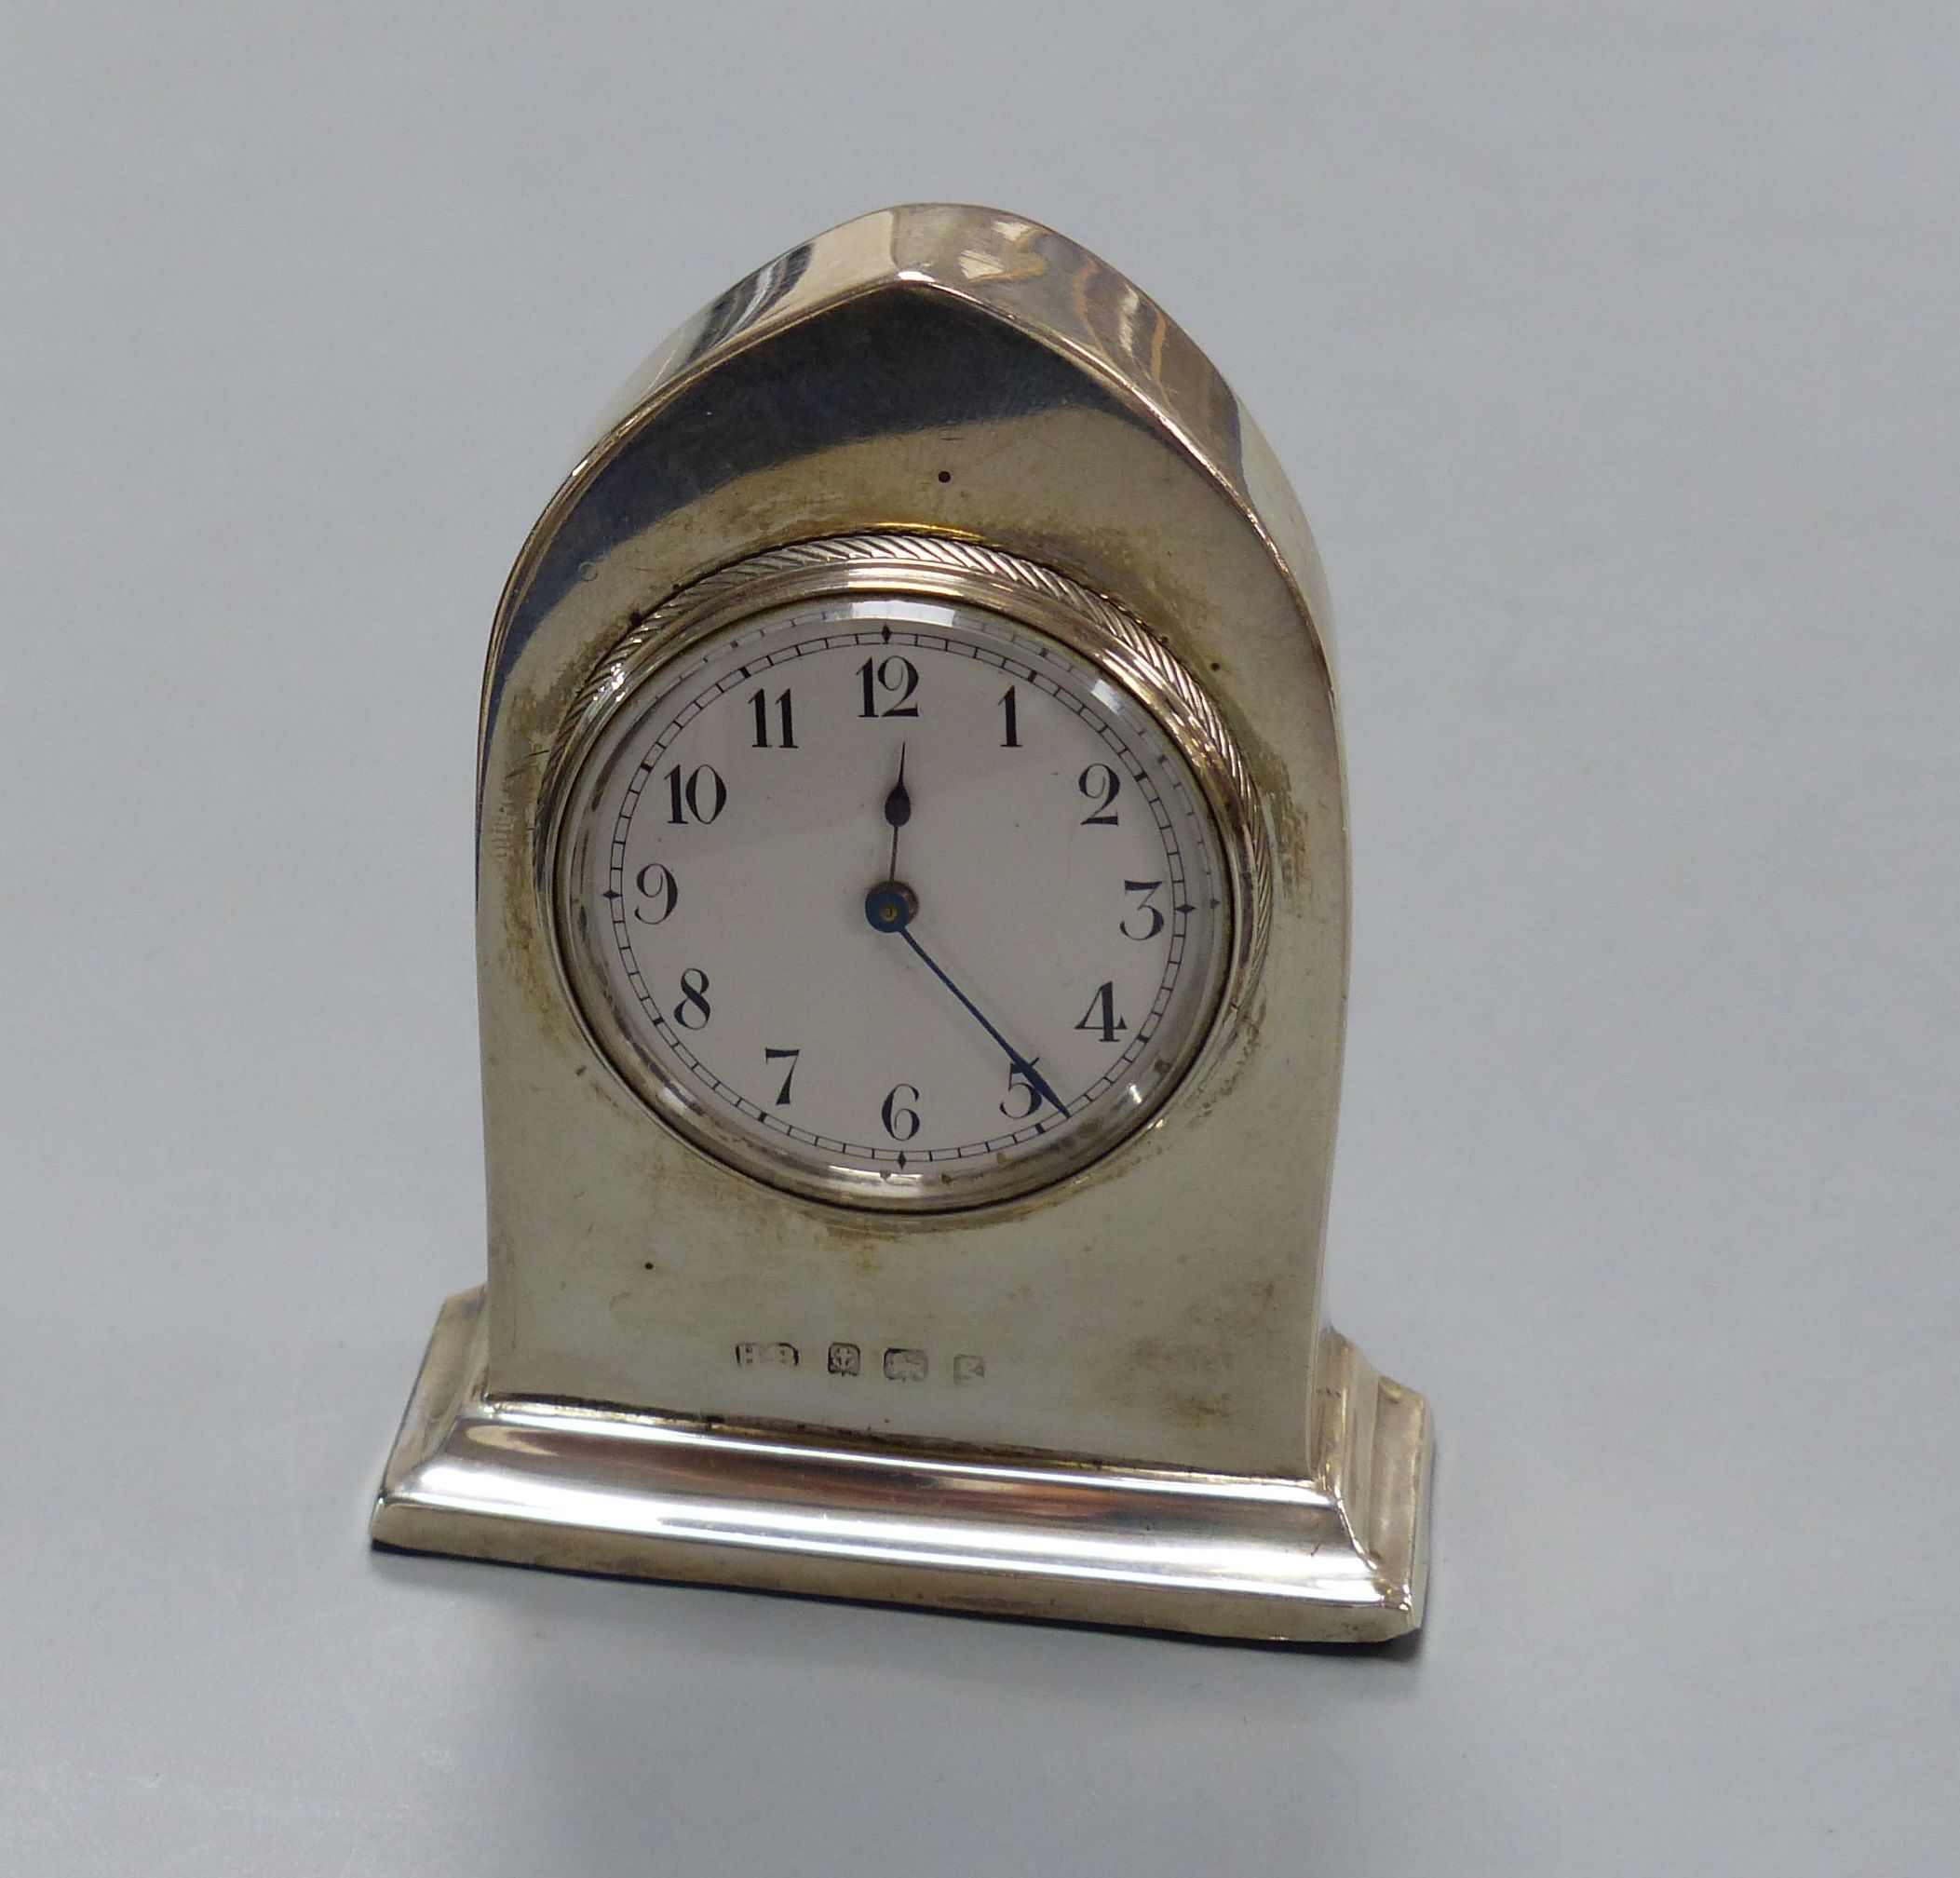 An Edwardian silver mounted lancet miniature timepiece, Birmingham, 1906, 71mm.